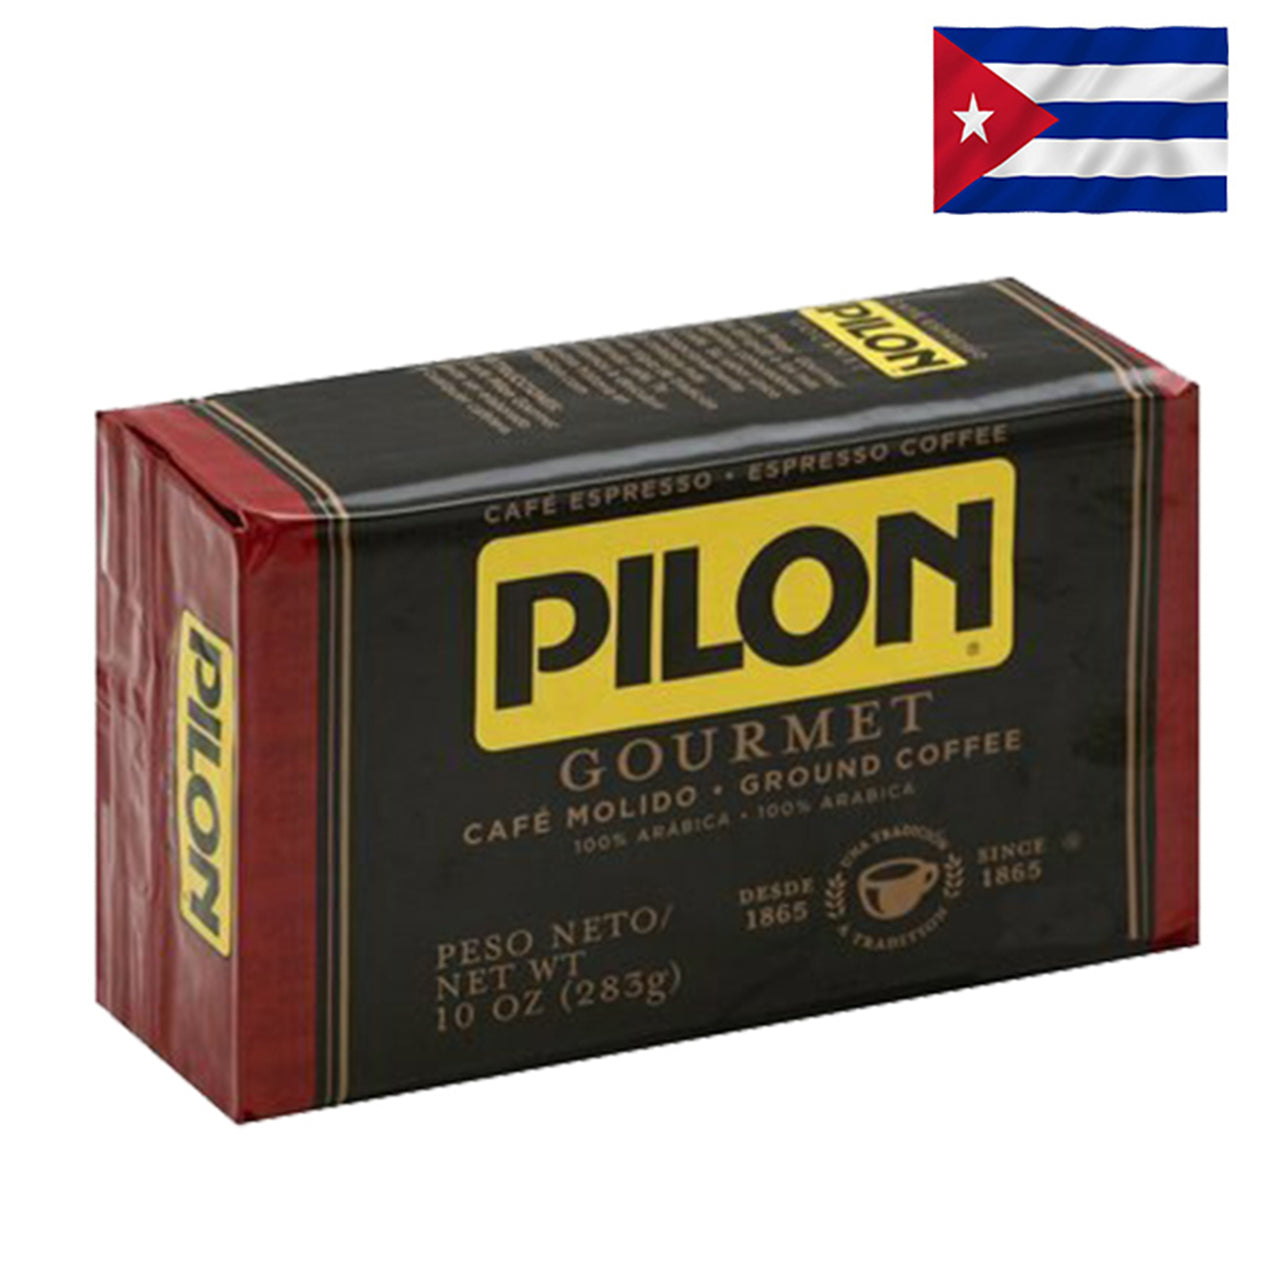 CUBAN PILON GOURMET COFFEE Espresso Ground Pack of 10 Oz